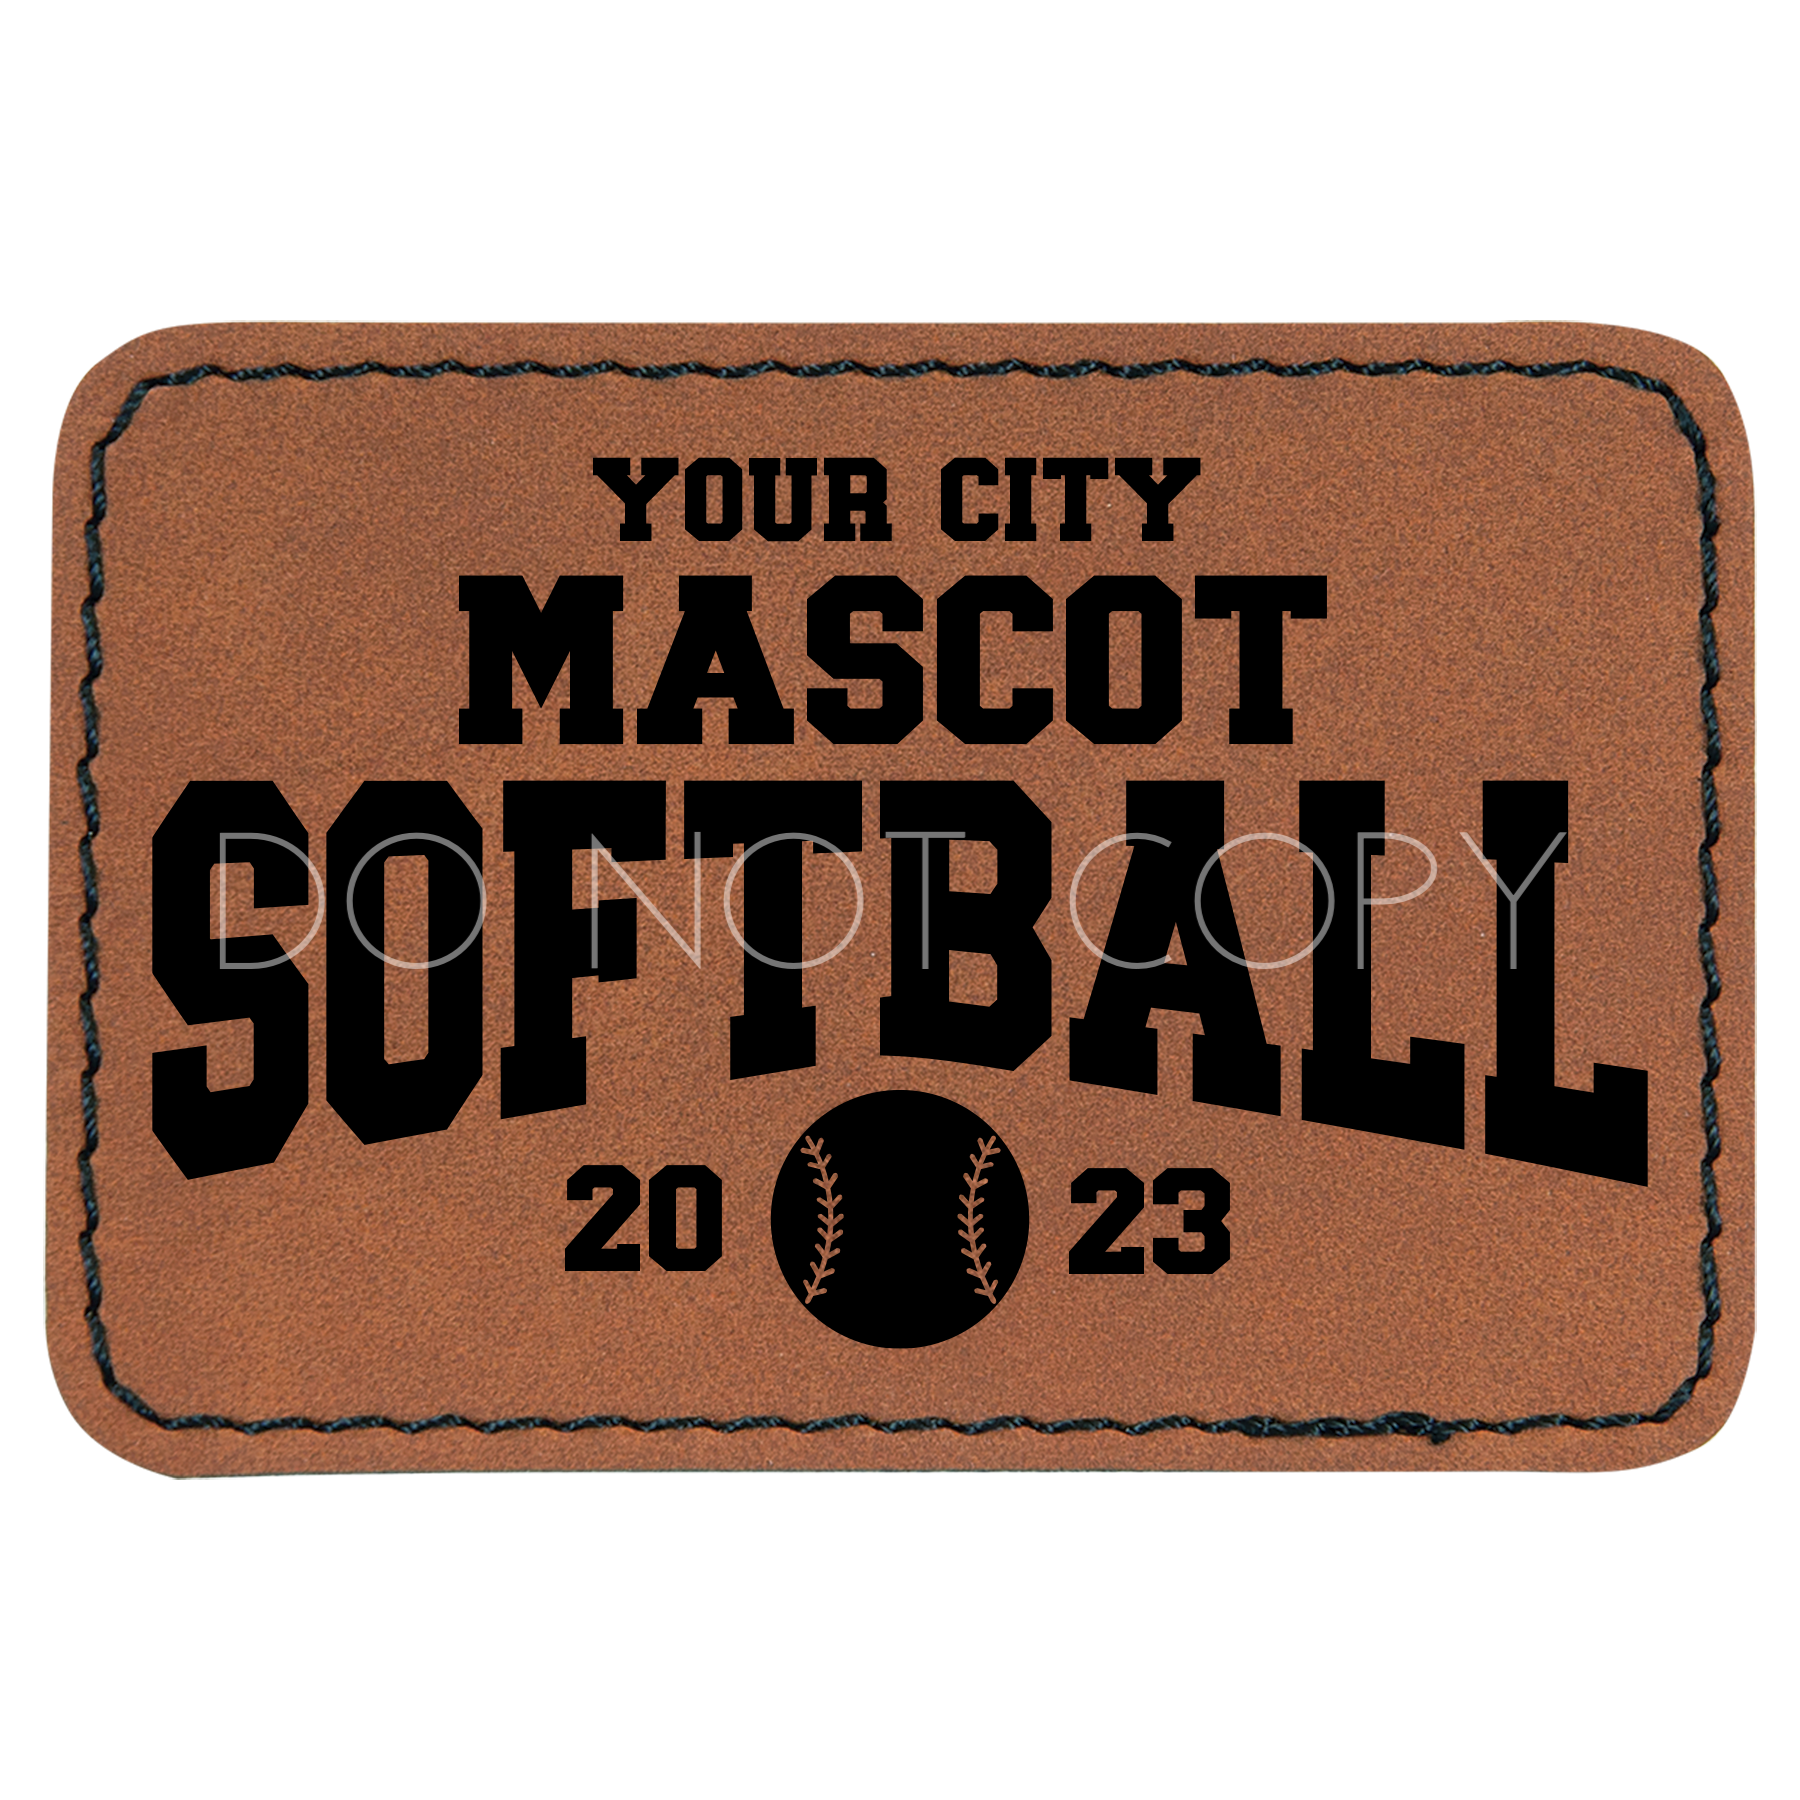 Your City Mascot Softball V.2 Patch